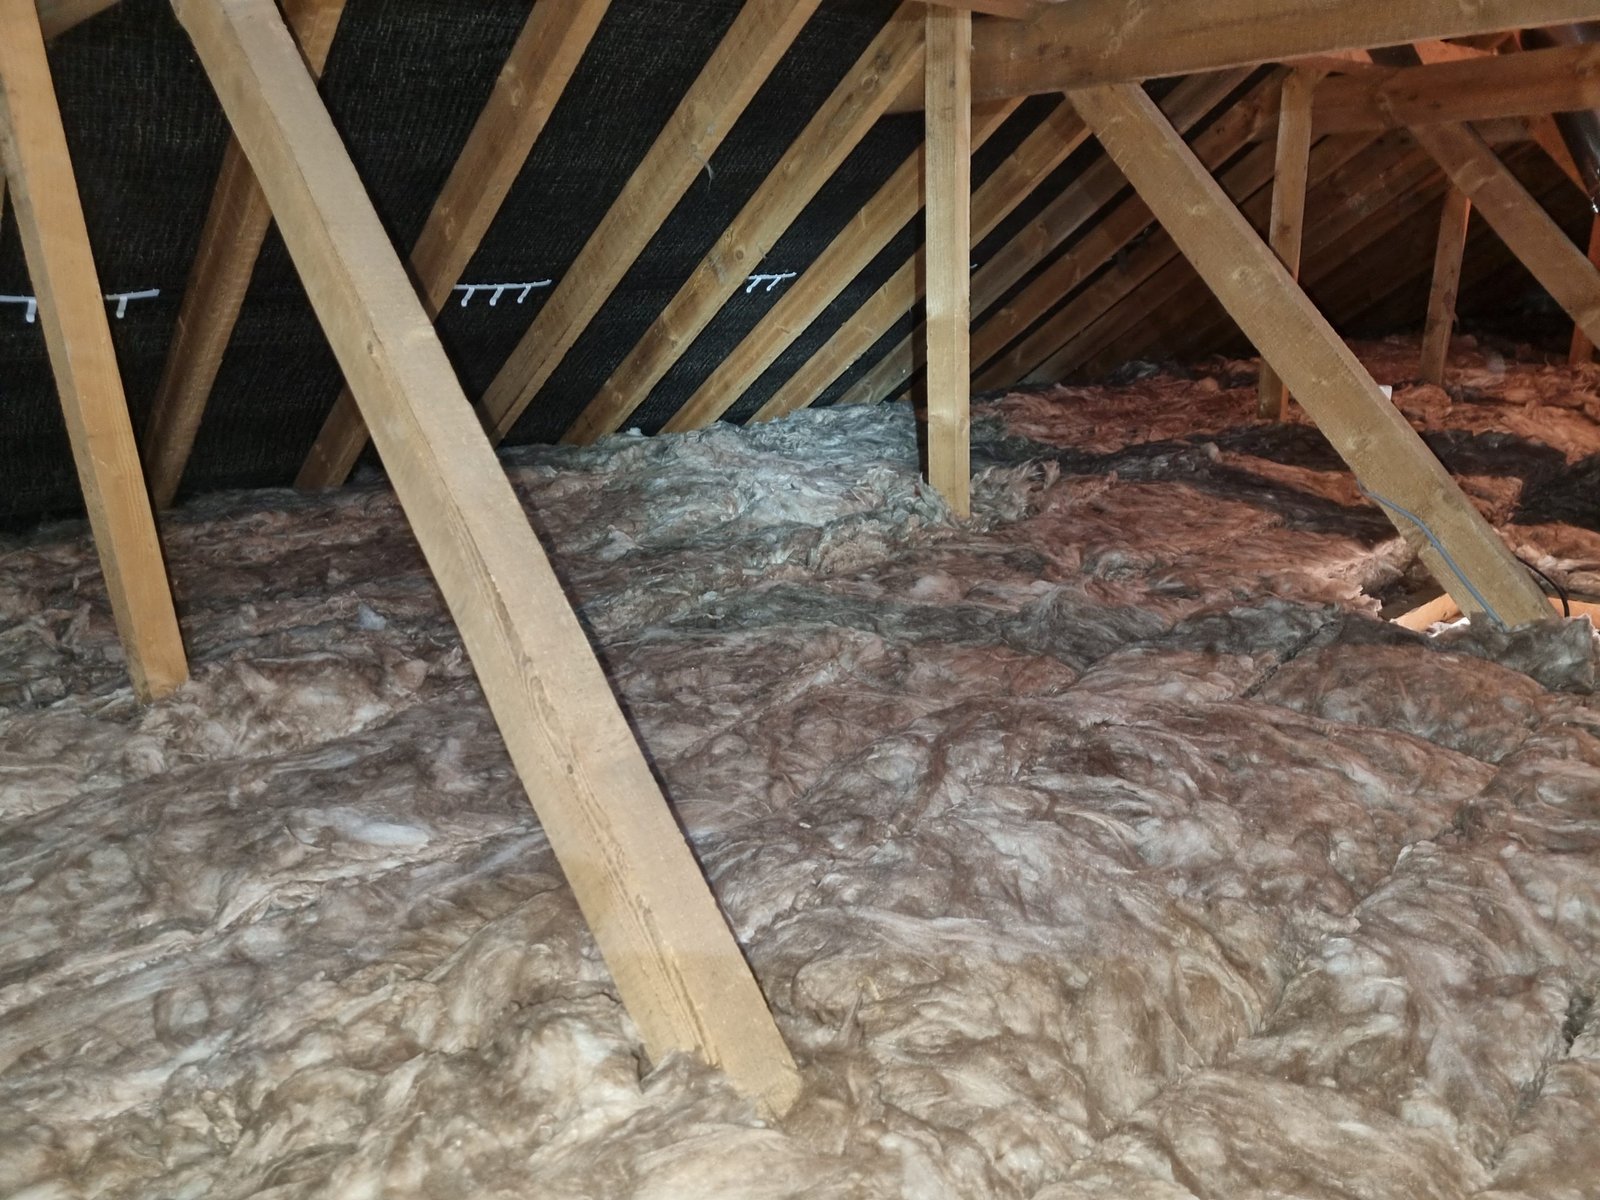 Loft insulation and lap vents